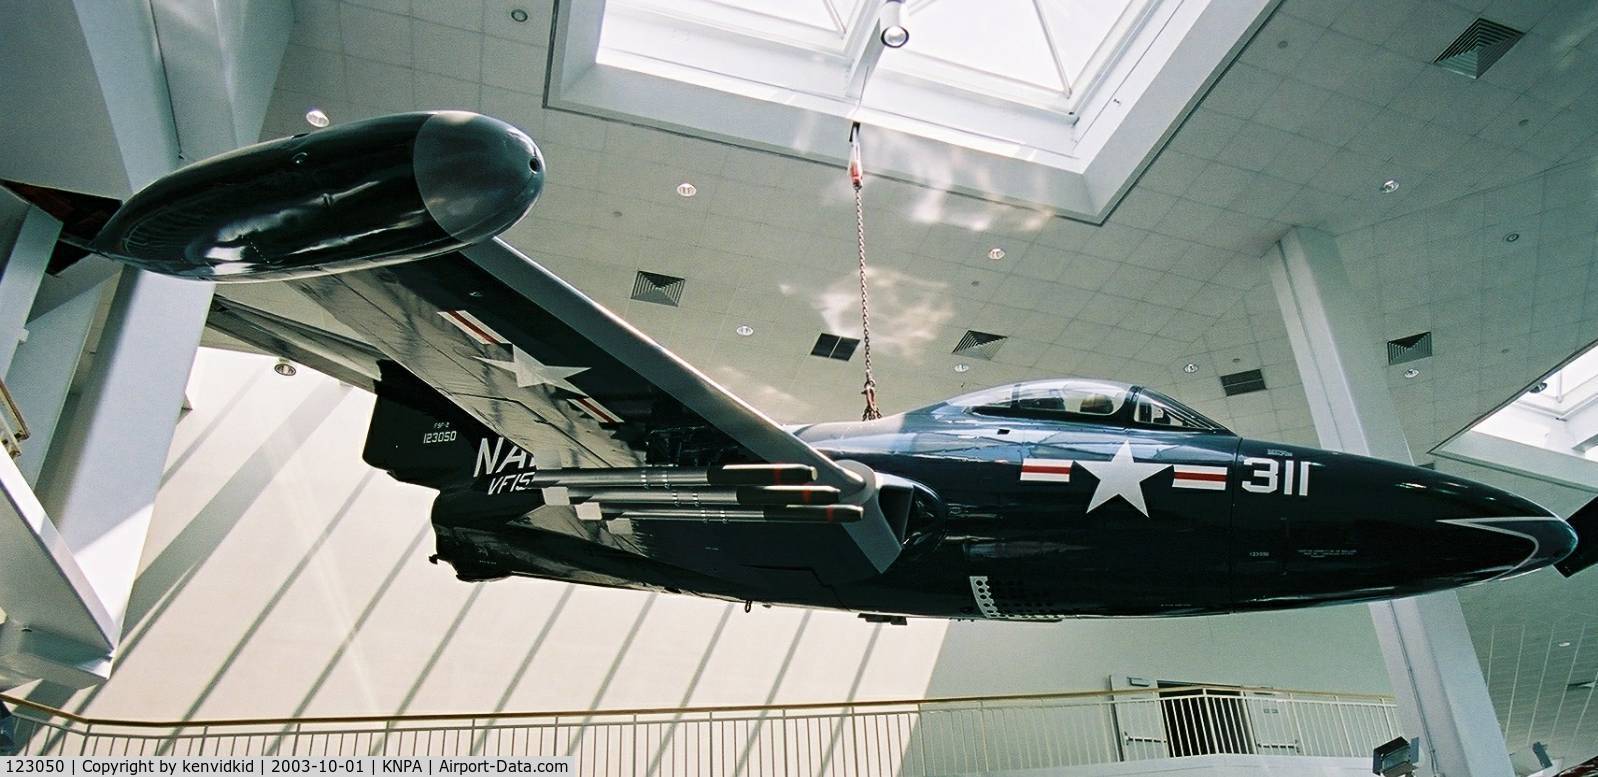 123050, Grumman F9F-2 Panther C/N K-65, On display at the Museum of Naval Aviation, Pensacola.